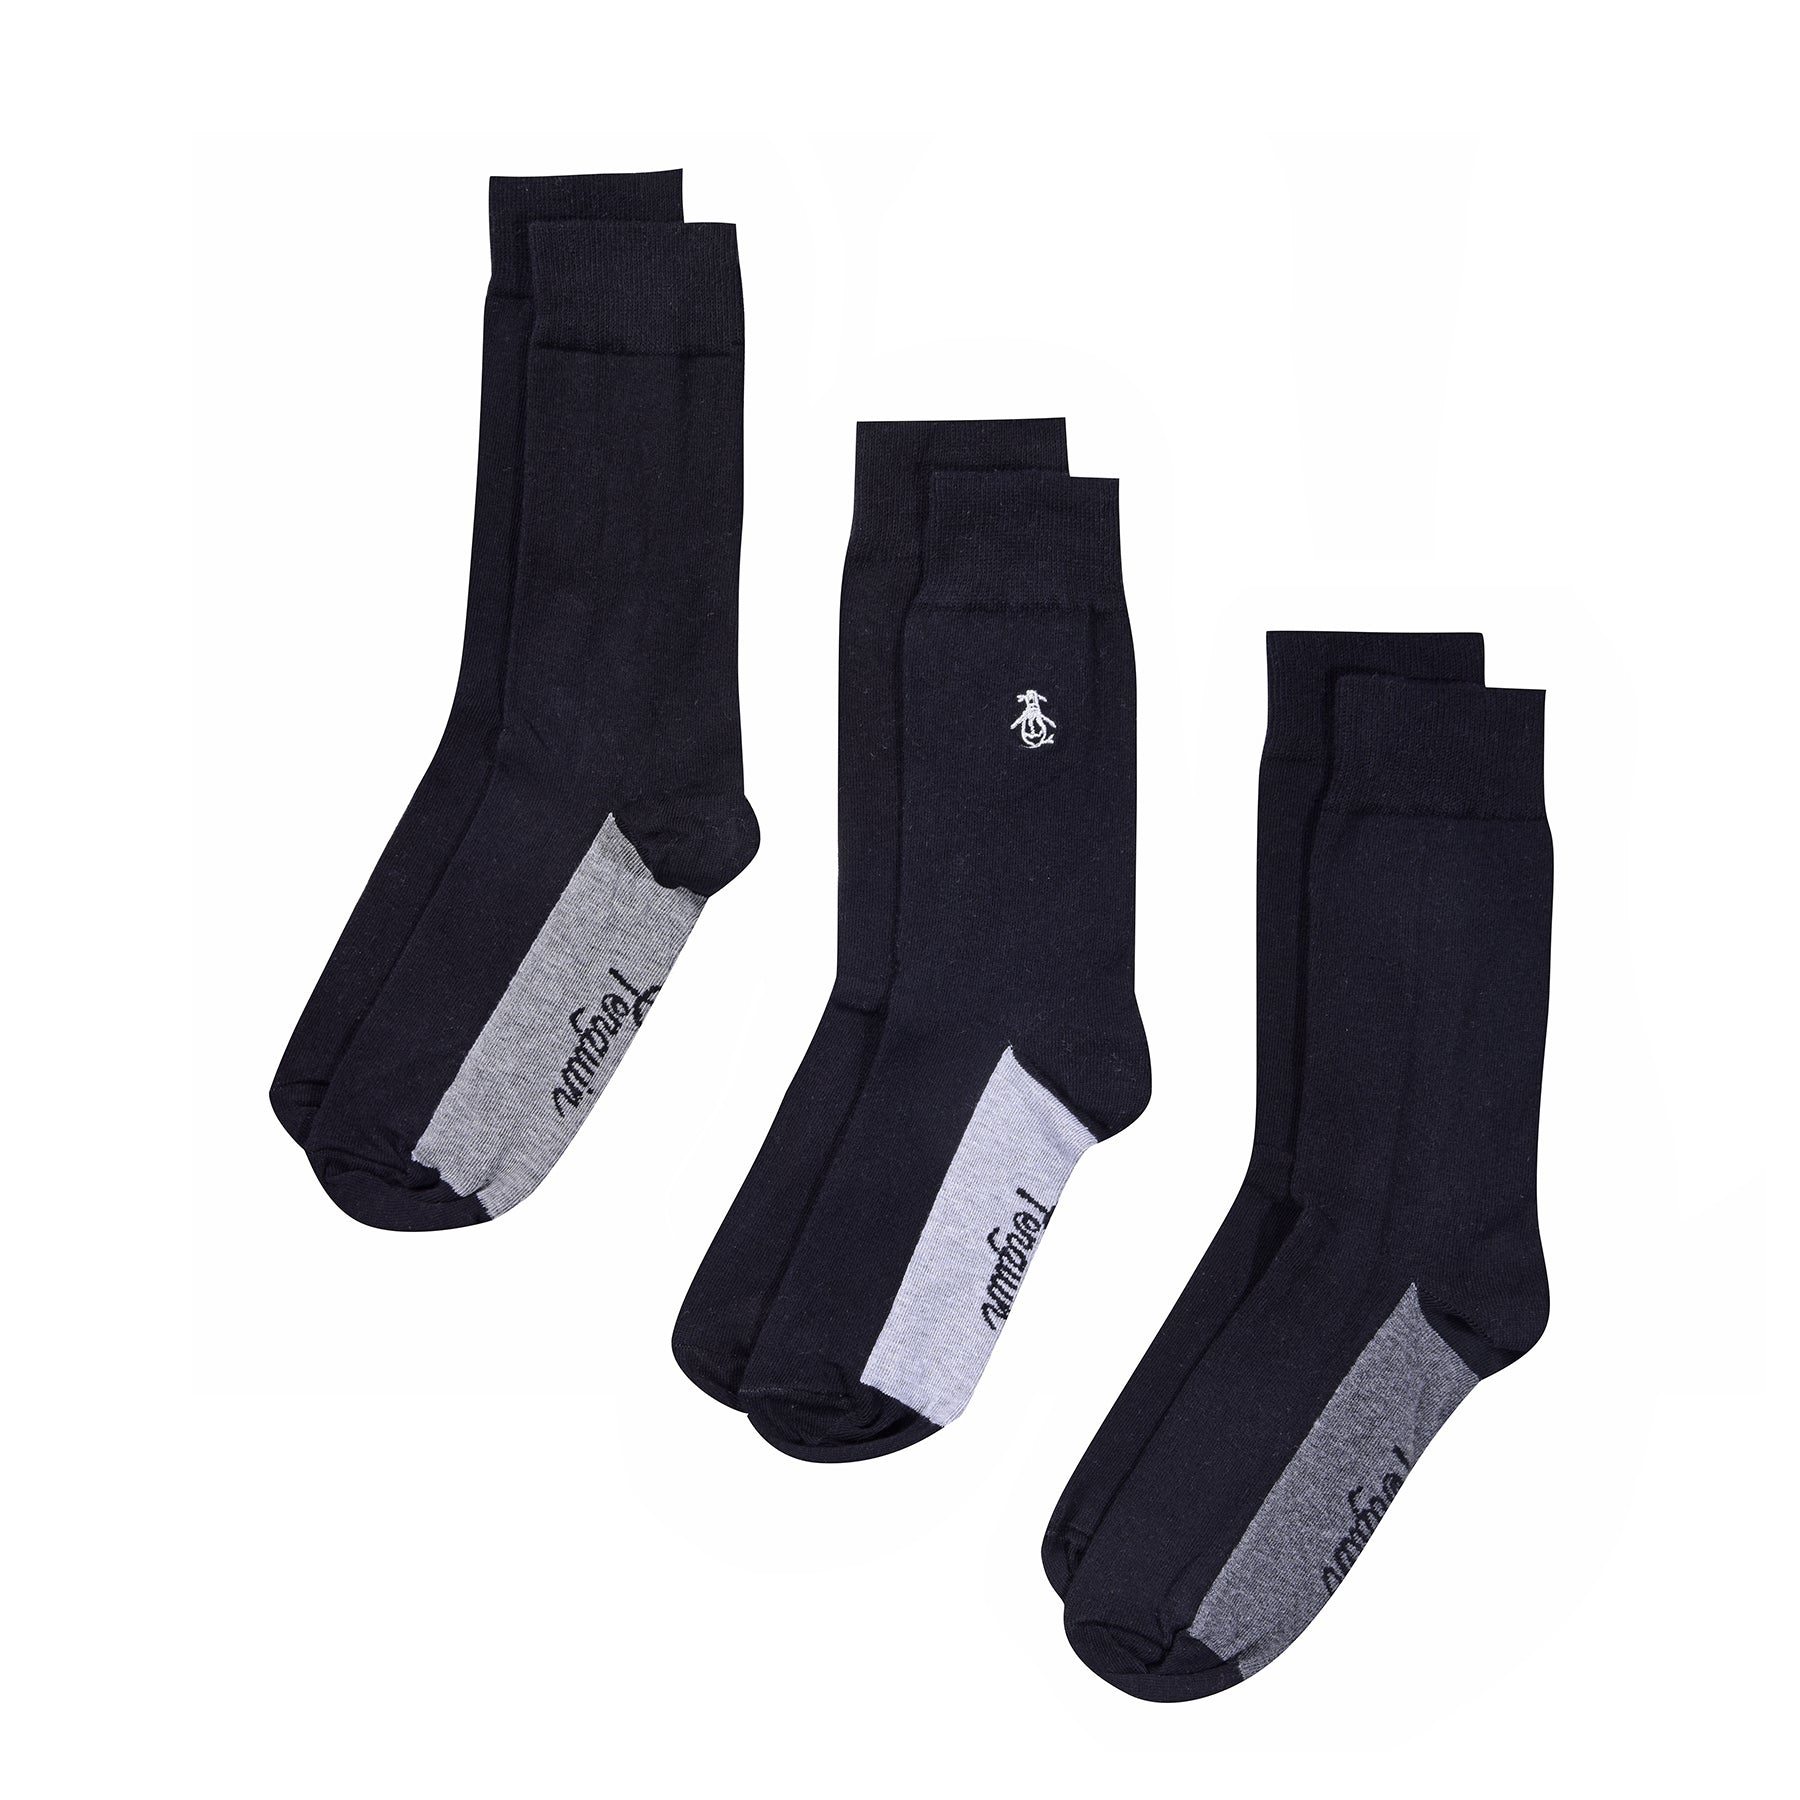 View 3 Pack Penguin Ankle Socks In Black information